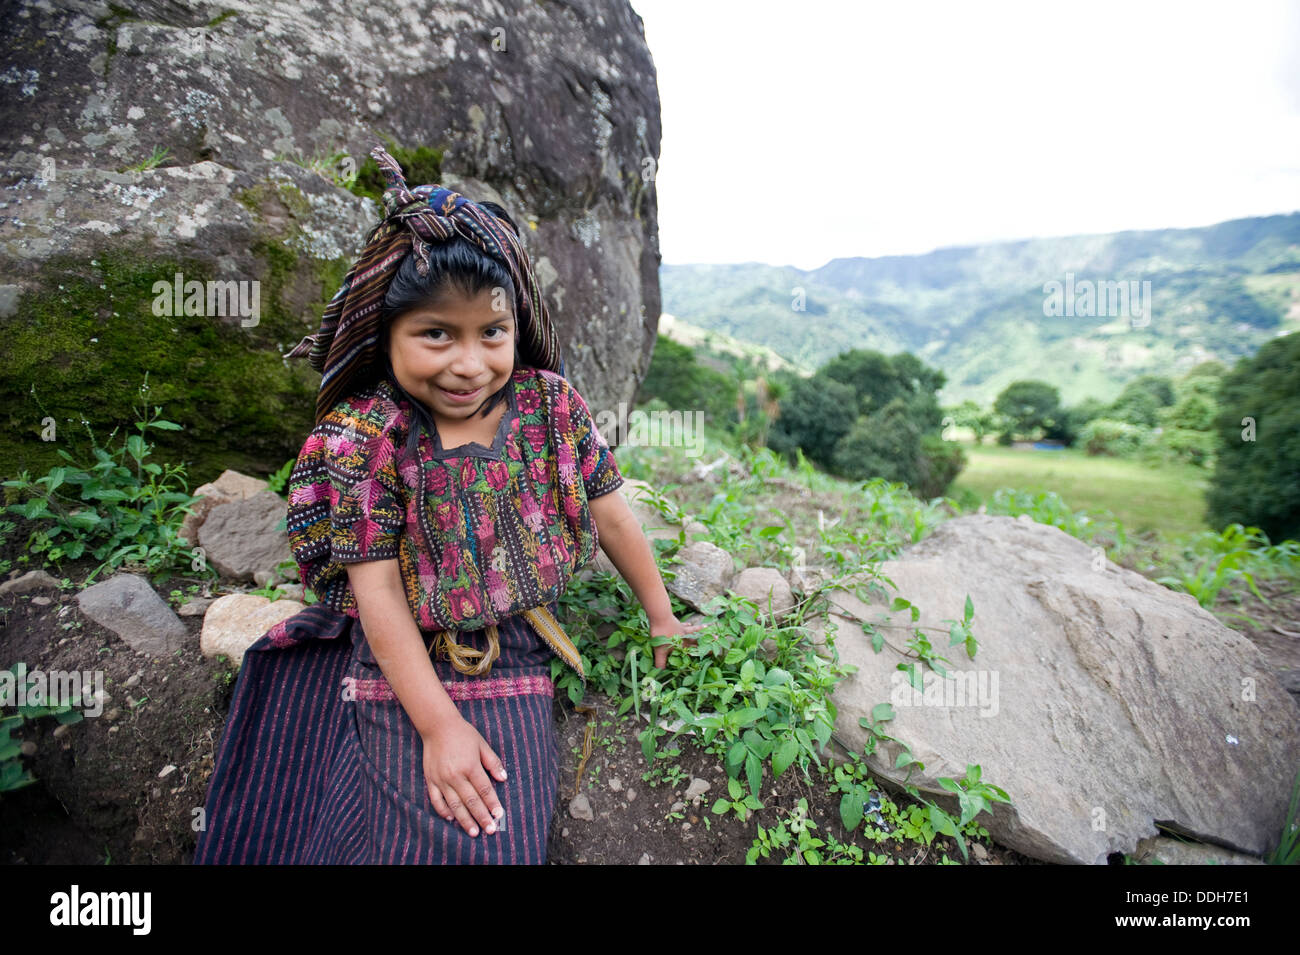 Guatemala indigenous girl in guipil and corte (maya traditional cloting) in Tiera Linda, Solola, Guatemala. Stock Photo